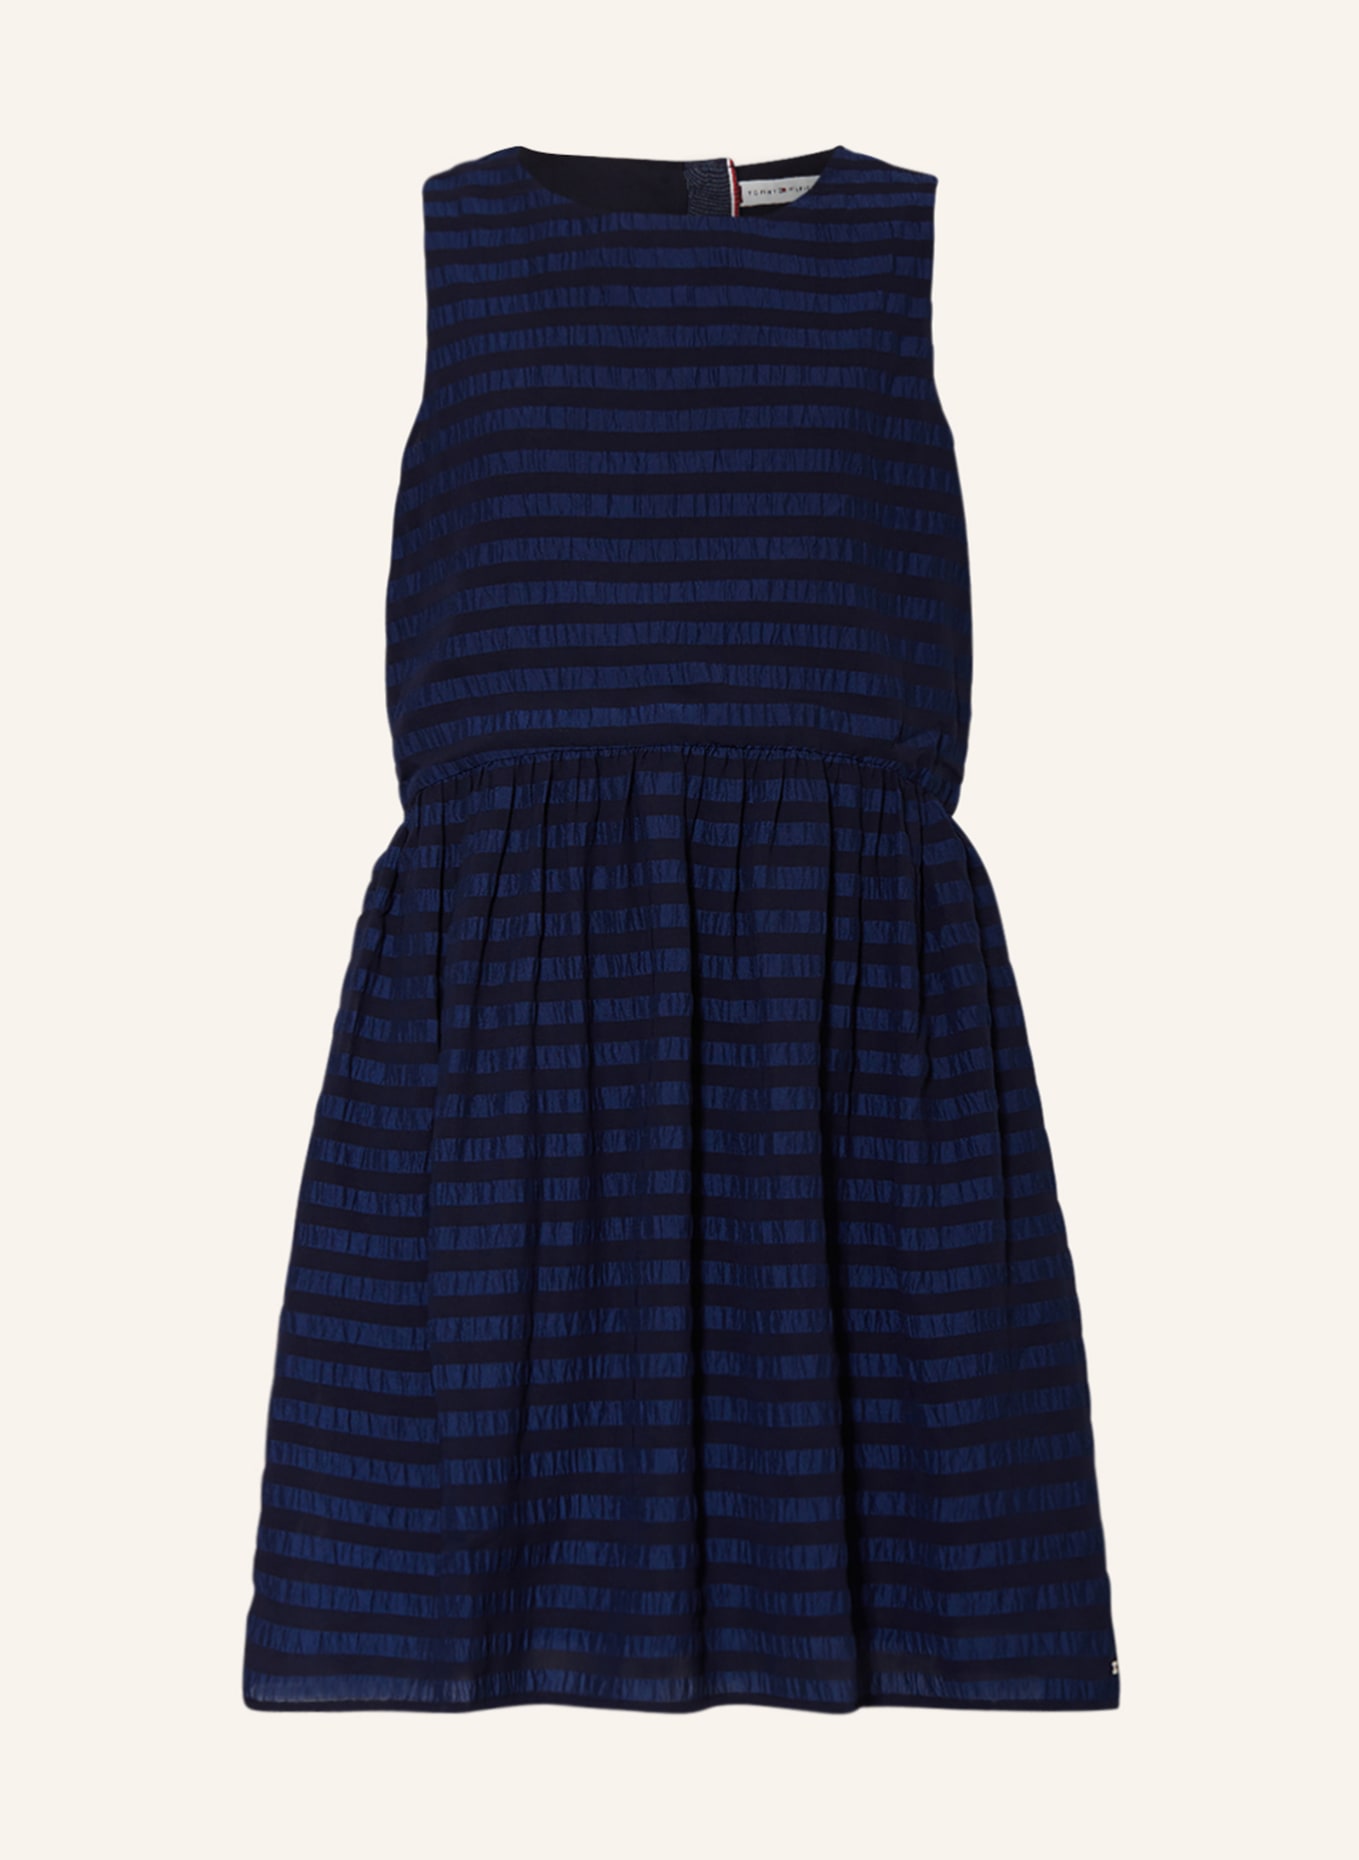 TOMMY HILFIGER Kleid, Farbe: BLAU/ DUNKELBLAU (Bild 1)